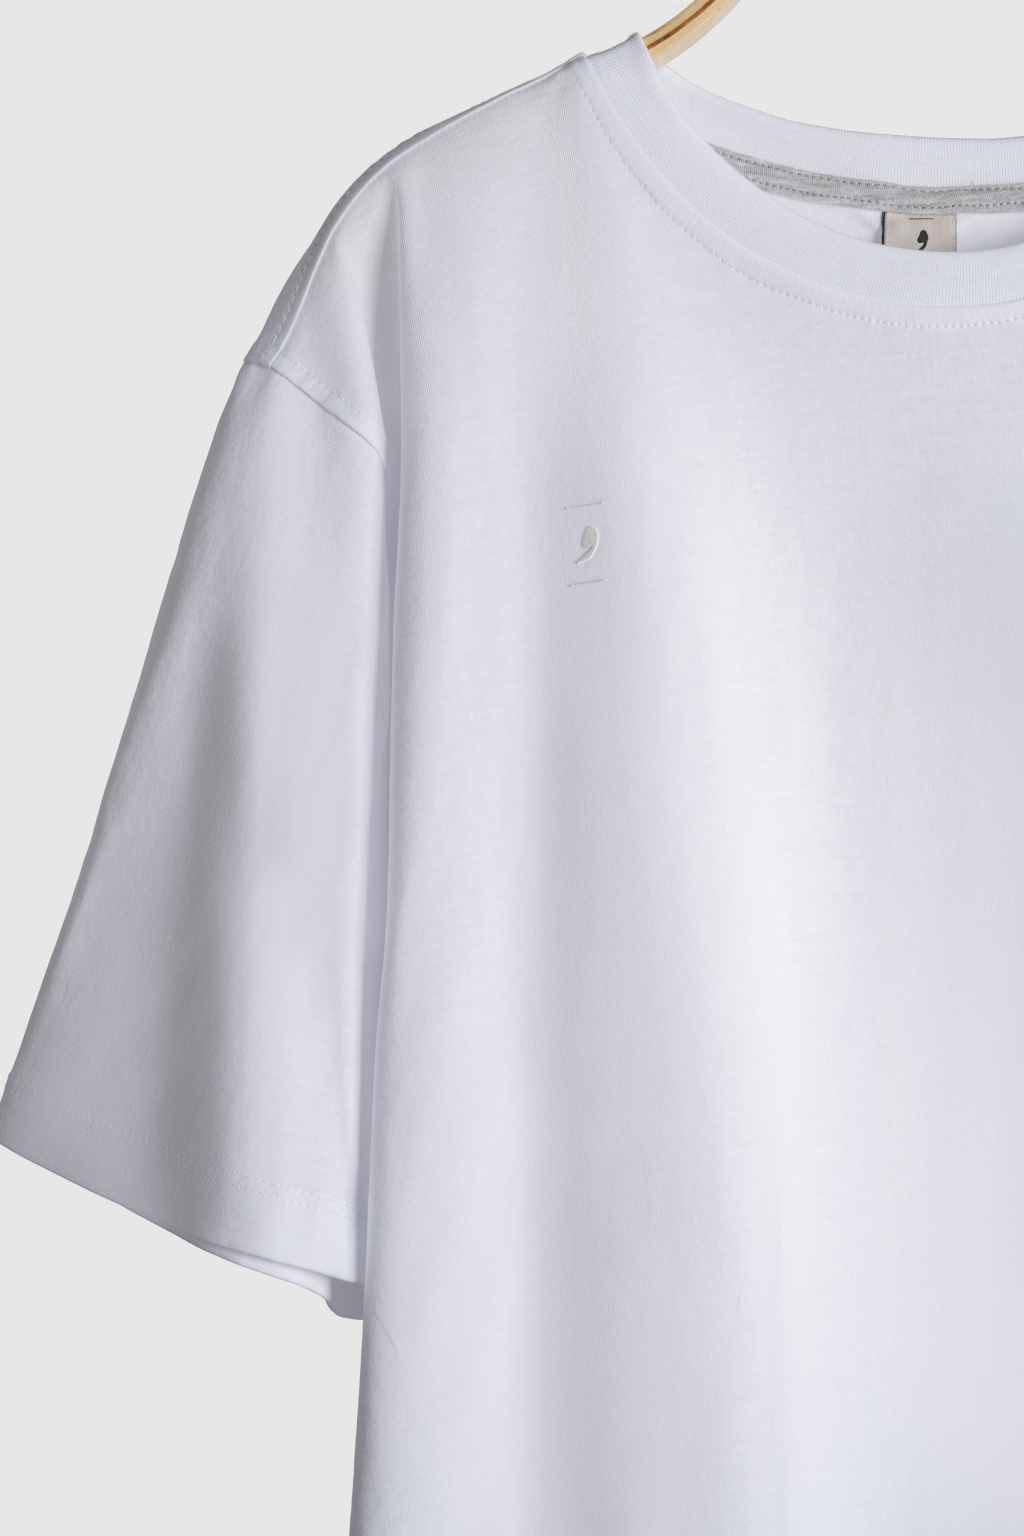 tshirt basic white 1